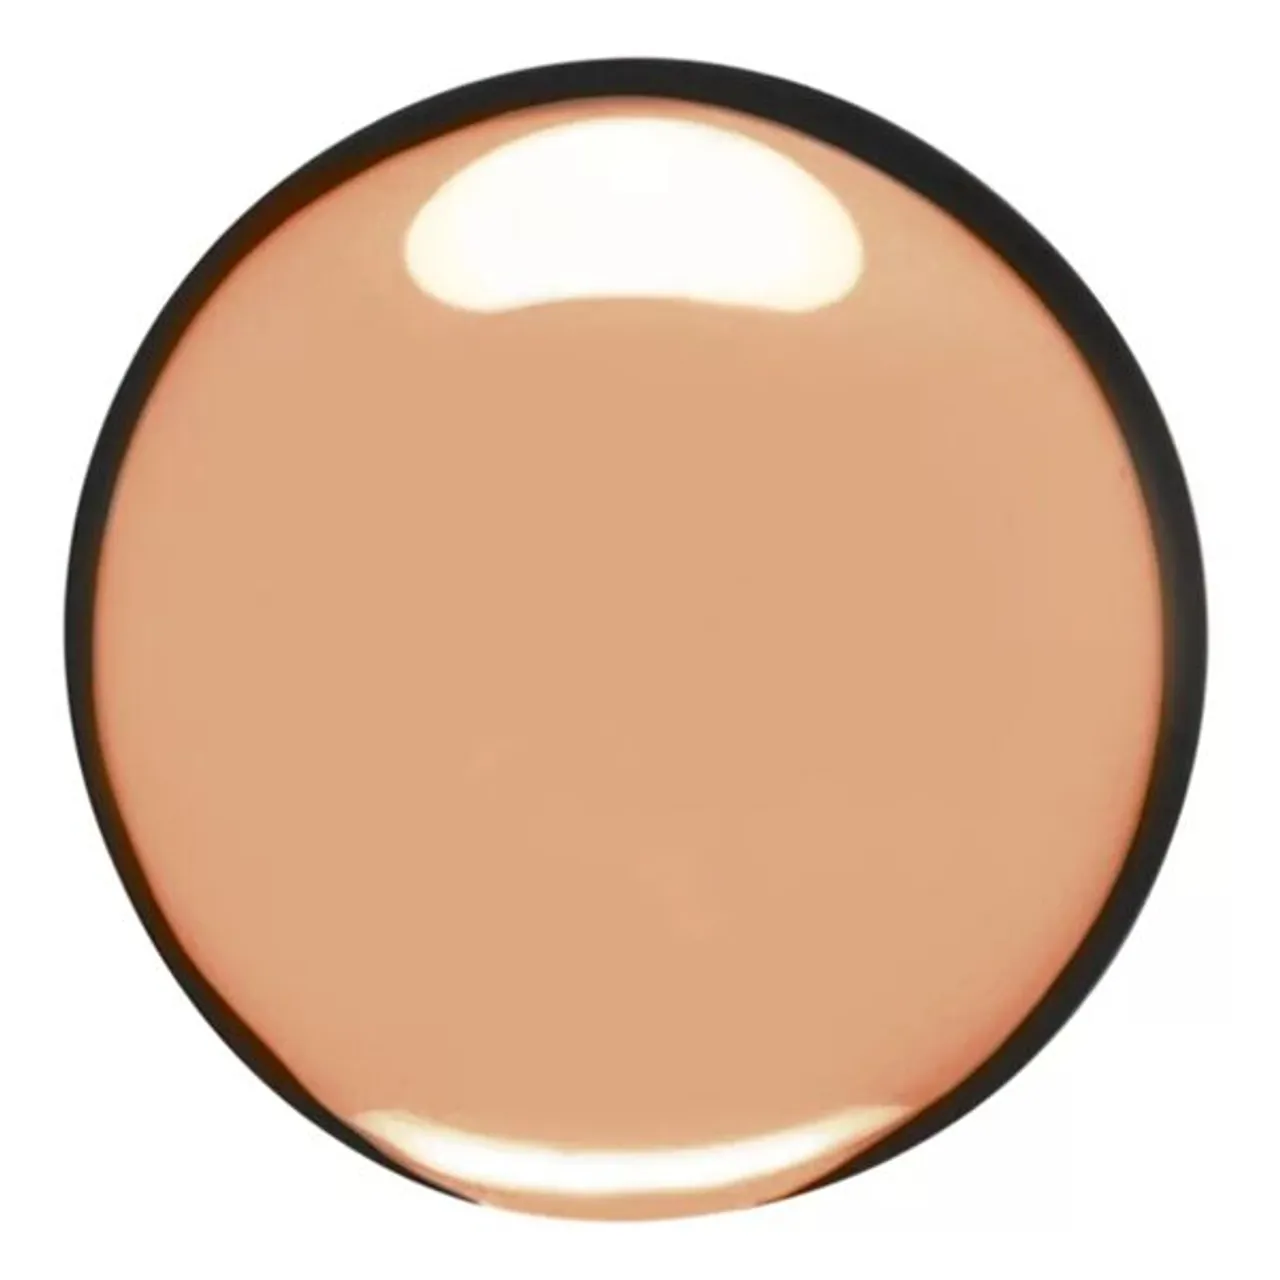 Clarins Skin Illusion Foundation SPF 15 - 108.5 Cashew - Unisex - Size: 30ml